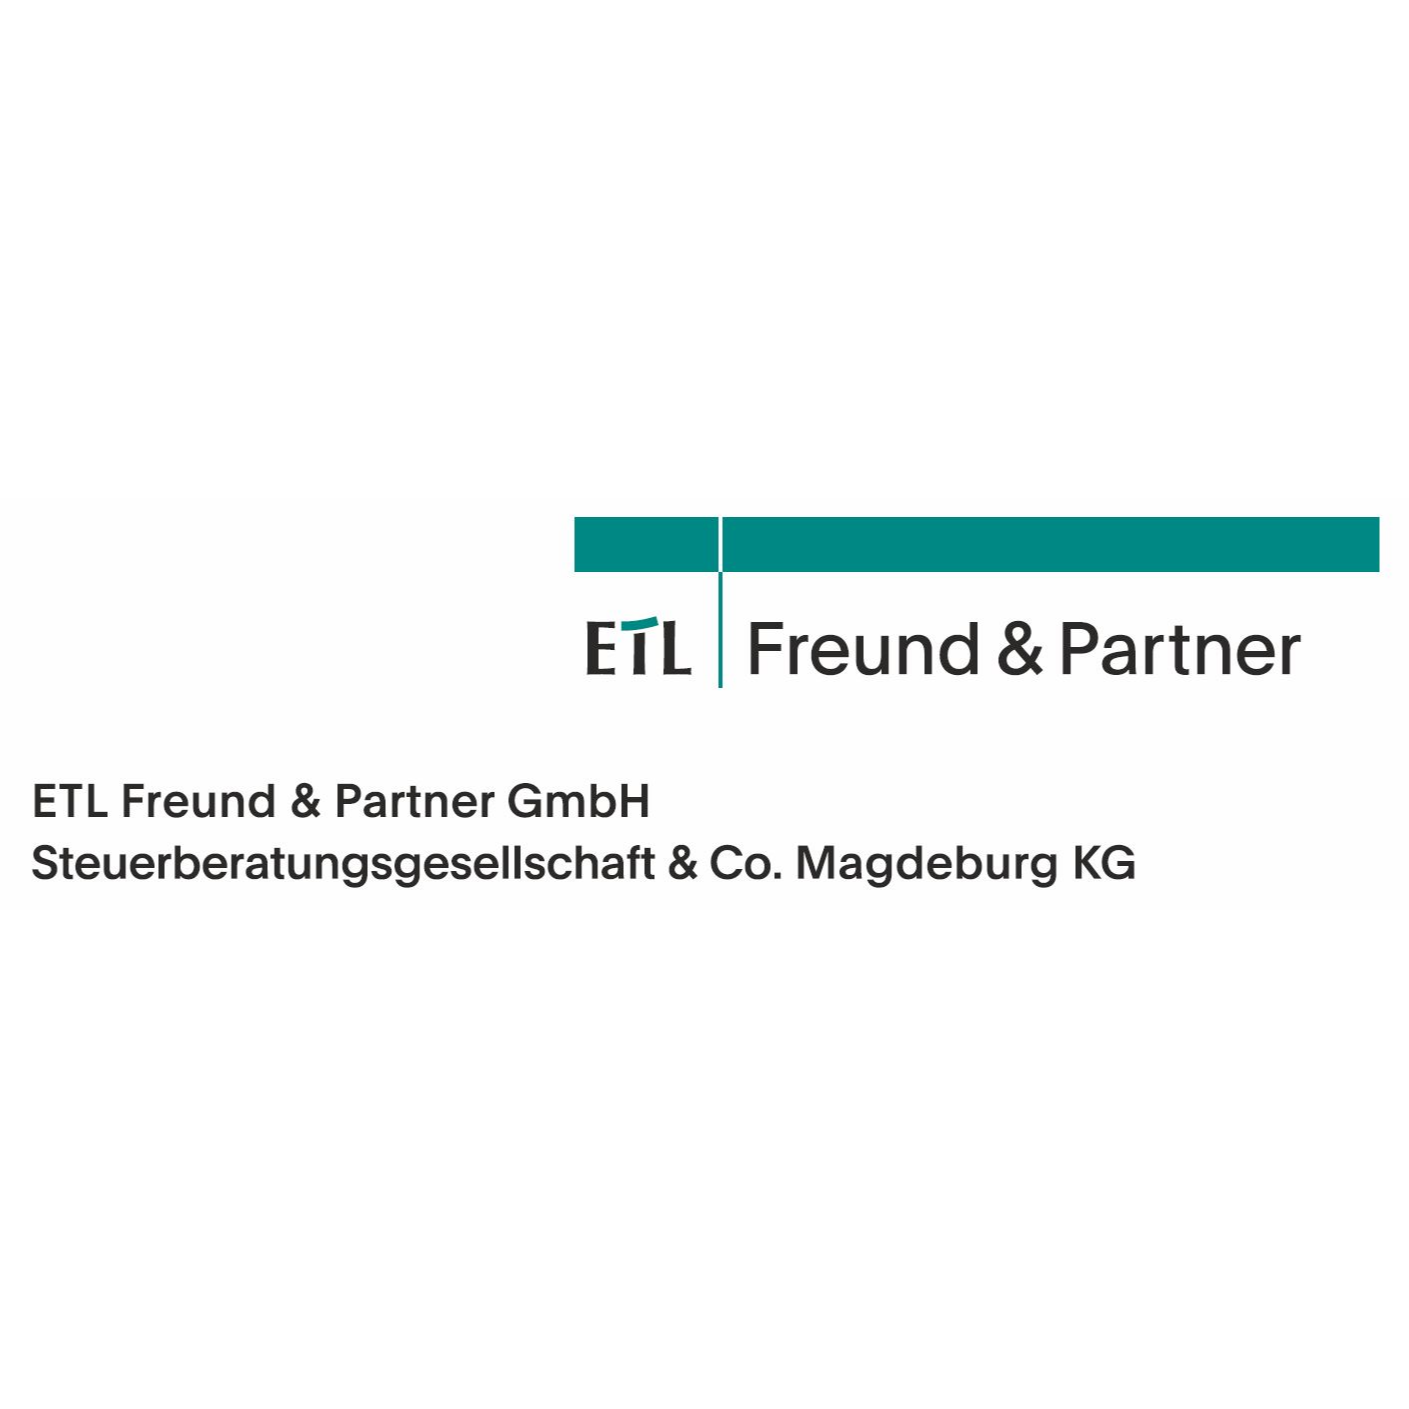 ETL Freund & Partner GmbH Steuerberatungsgesellschaft & Co. Magdeburg KG in Magdeburg - Logo